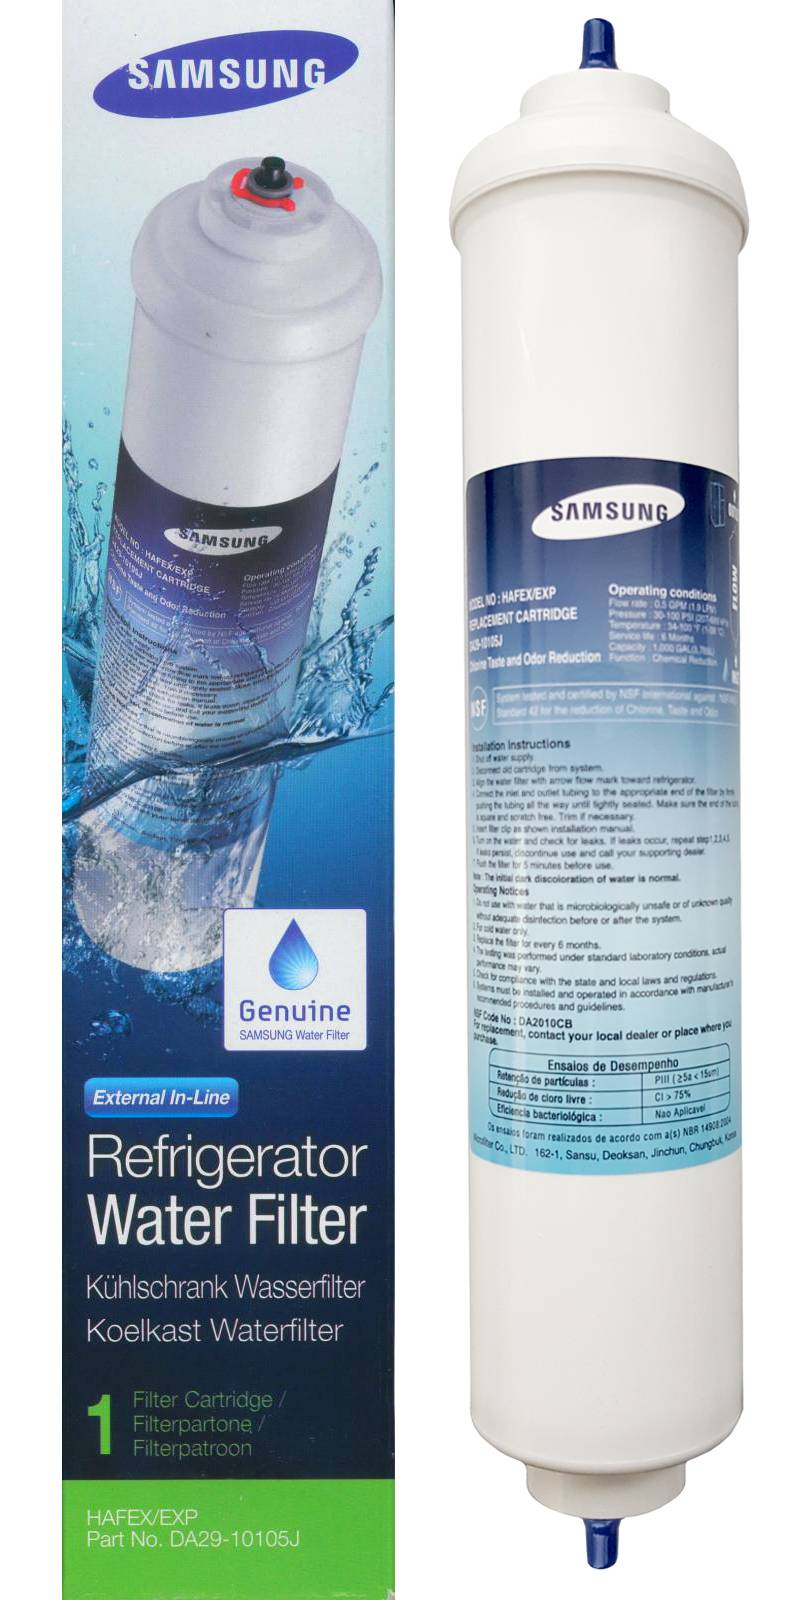 B-Ware Original Samsung DA29-10105J Wasserfilter Filter HAFEX/EXP Kühlschrank